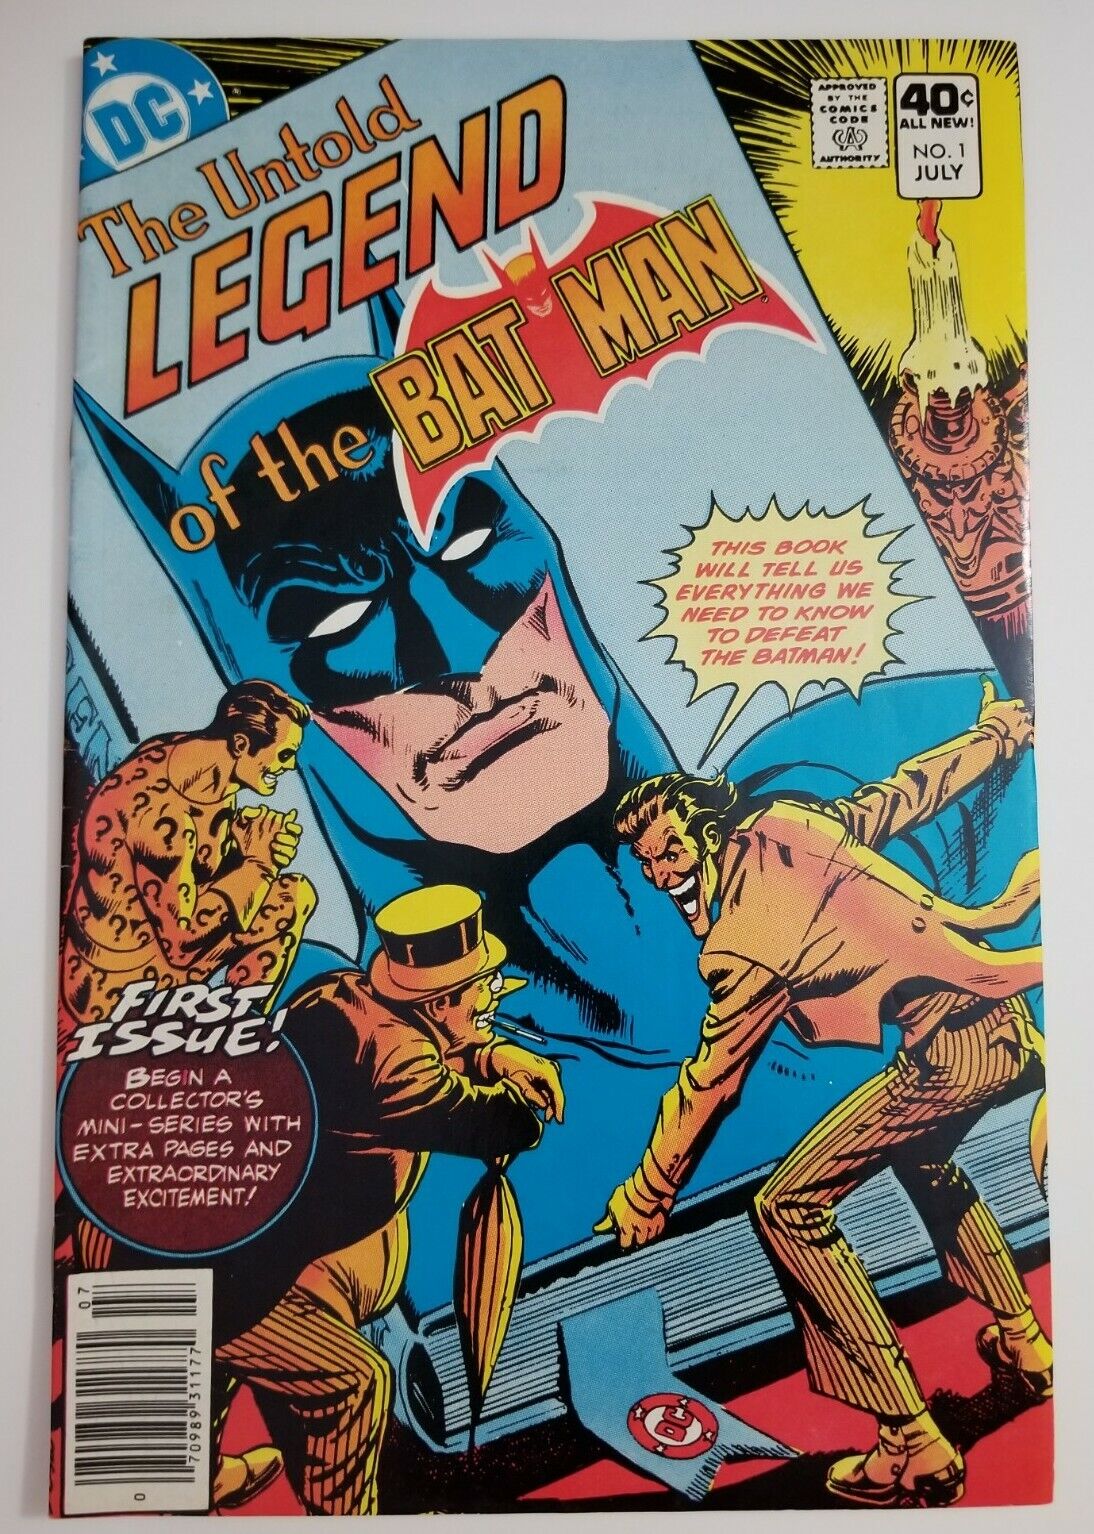 The Untold Legend of Batman #1 (DC Comics, 1980) Len Wein, John Byrne | eBay